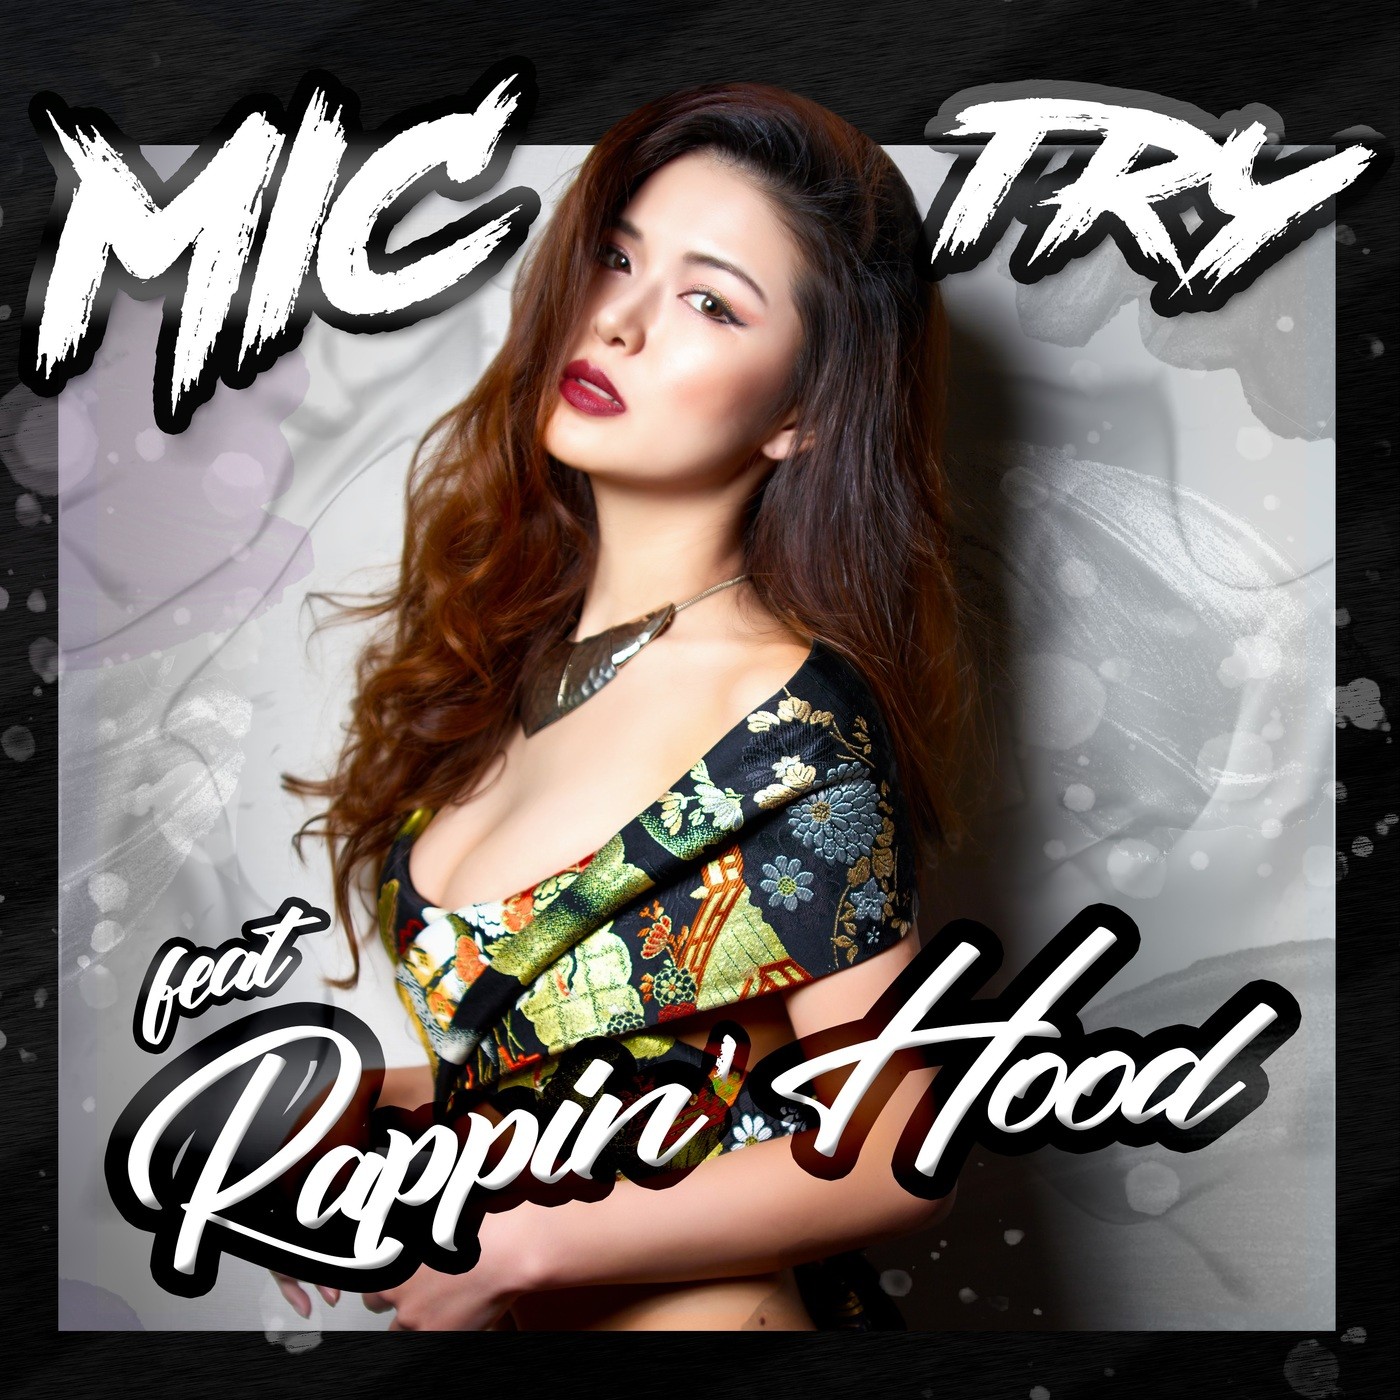 MIC – Try (feat. Rappin’ Hood) [FLAC / WEB] [2019.04.05]